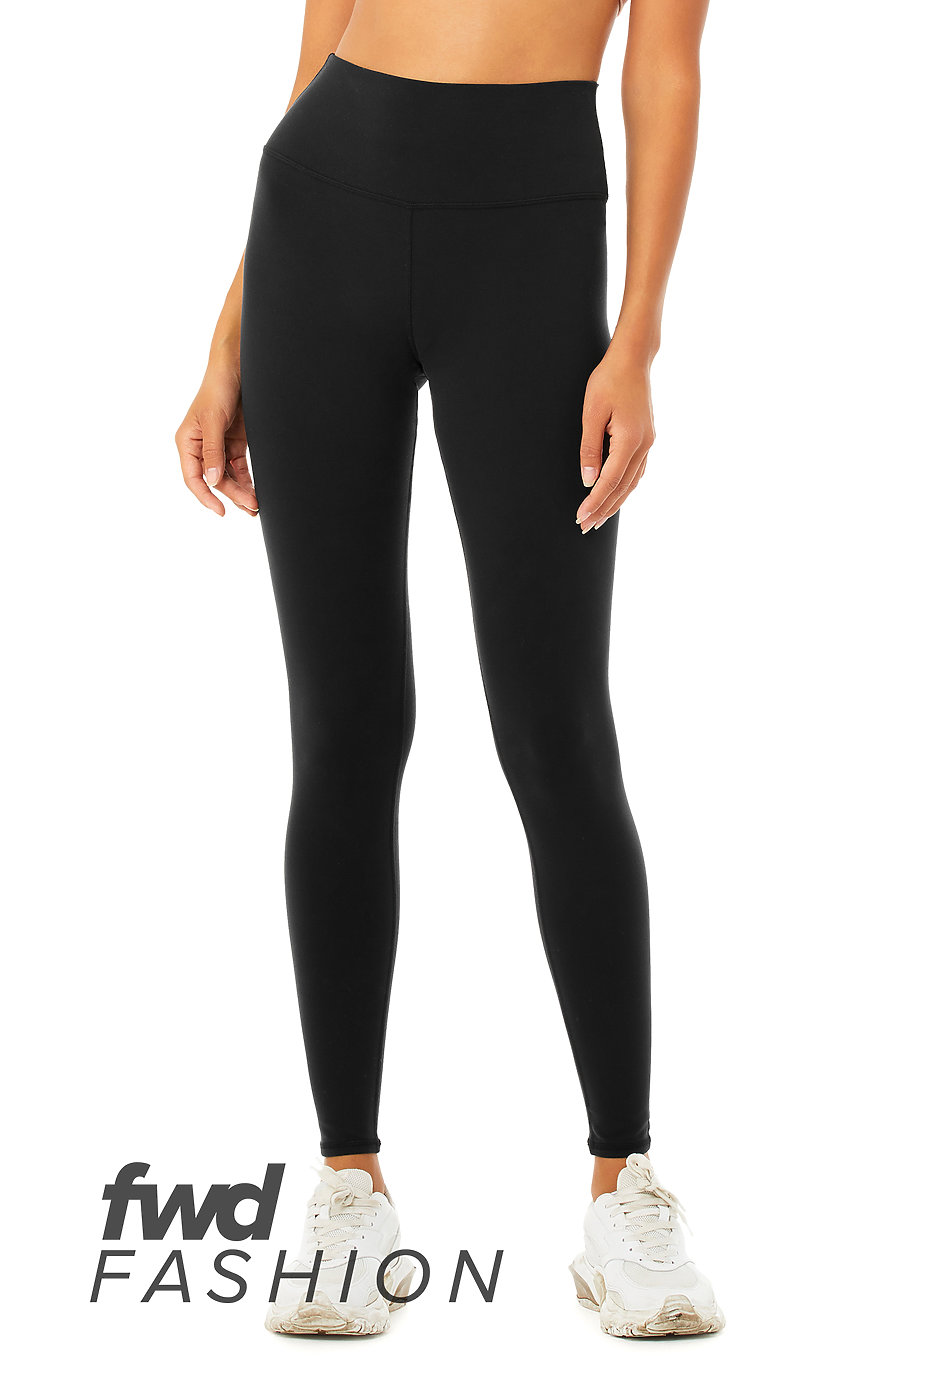 Buy Super weston Plain Black 100% Cotton Leggings for Summer wear  (Wholesale Rate) (Black, Free Size) at